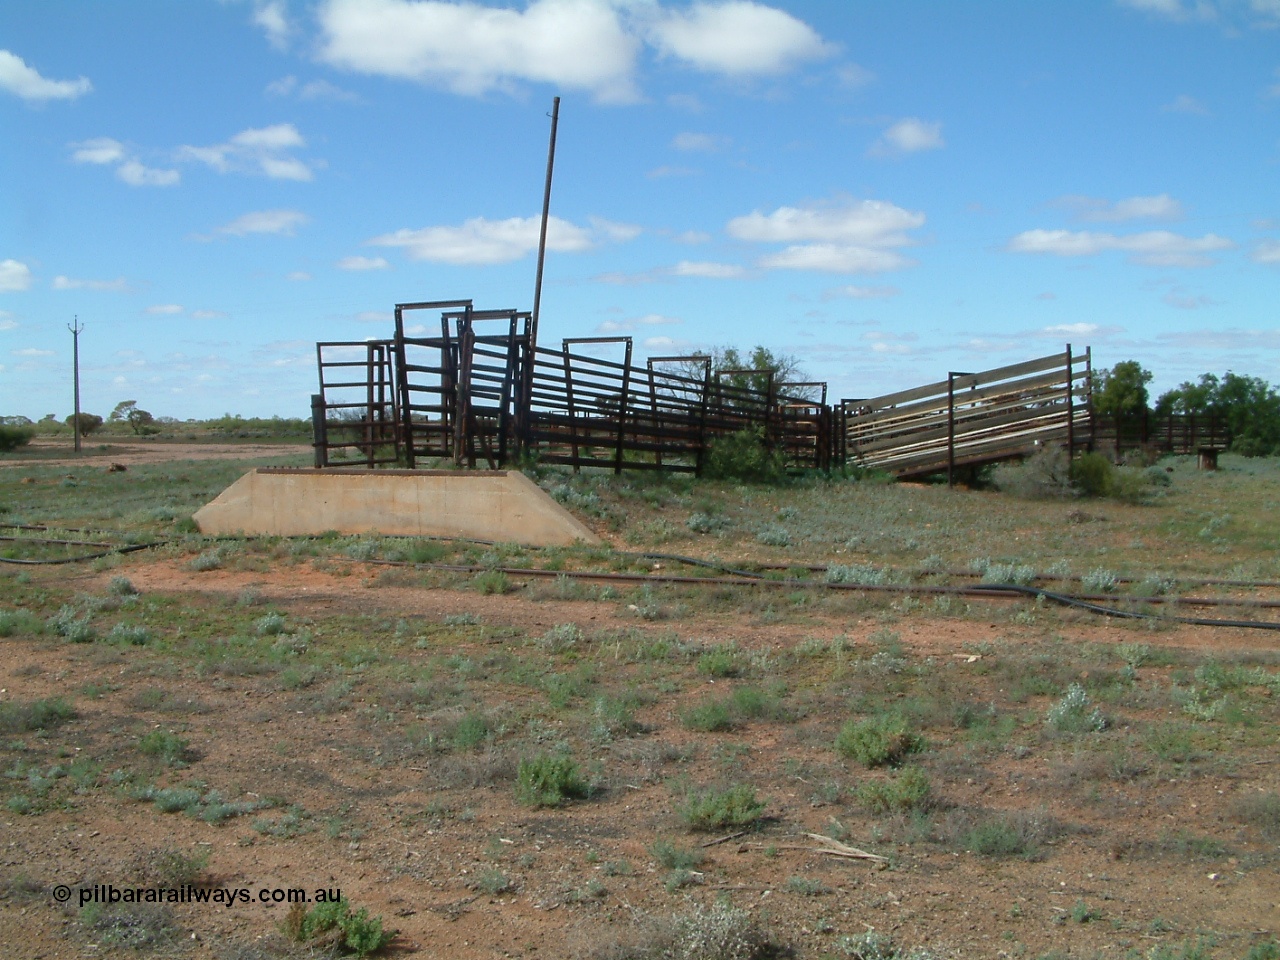 030415 141151
Kingoonya, located at the 426.5 km on the Trans Australian Railway, looking north east at the cattle yard loading race. [url=https://goo.gl/maps/DG1qZSP4XKBAzTxQ8]GeoData location[/url].
